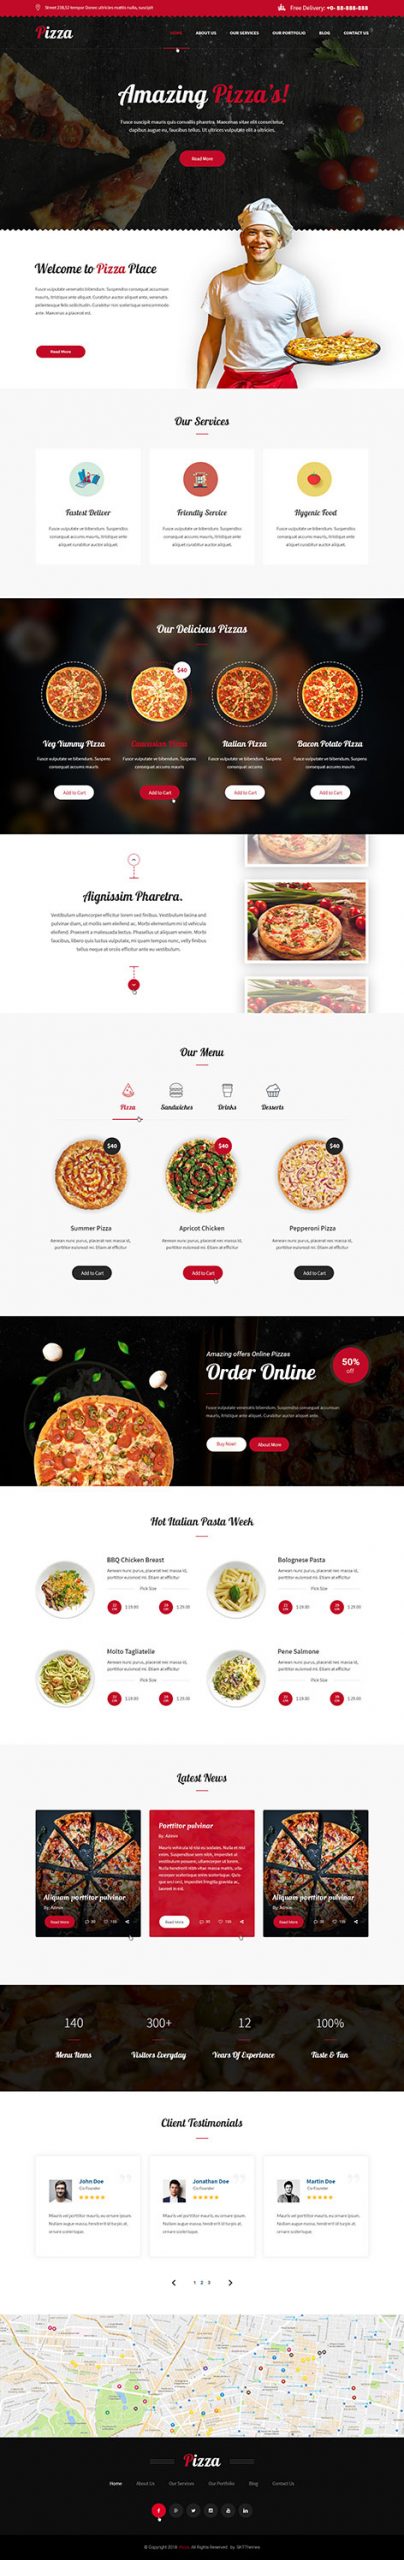 pizza ordering WordPress theme1 scaled